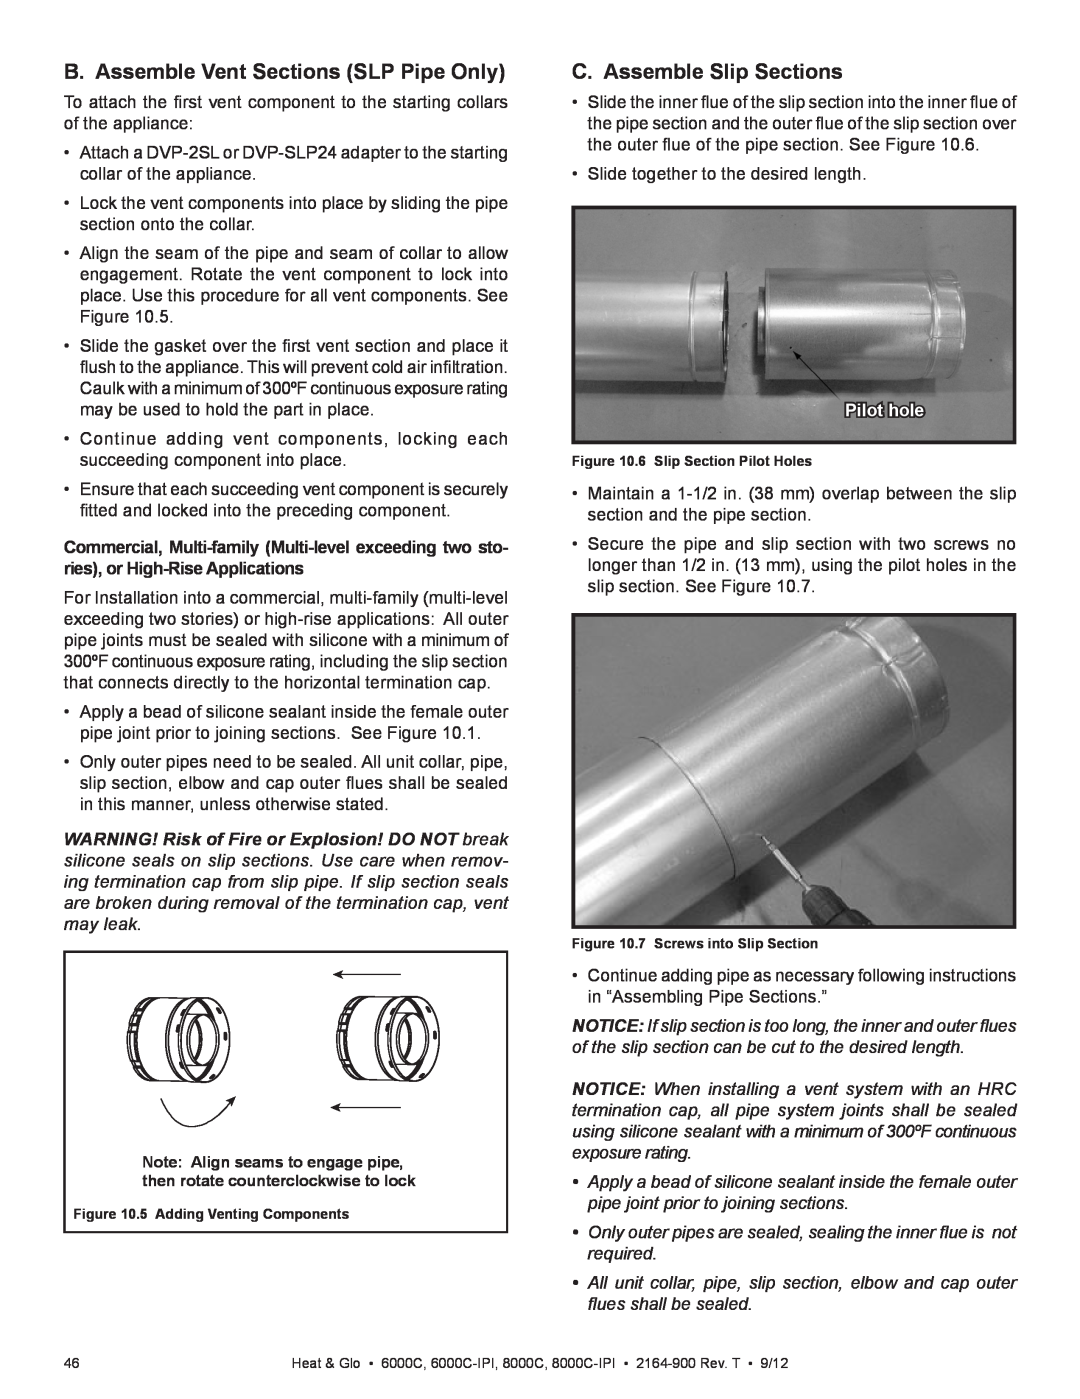 Heat & Glo LifeStyle 6000C manual B. Assemble Vent Sections SLP Pipe Only, C. Assemble Slip Sections, Pilot hole 